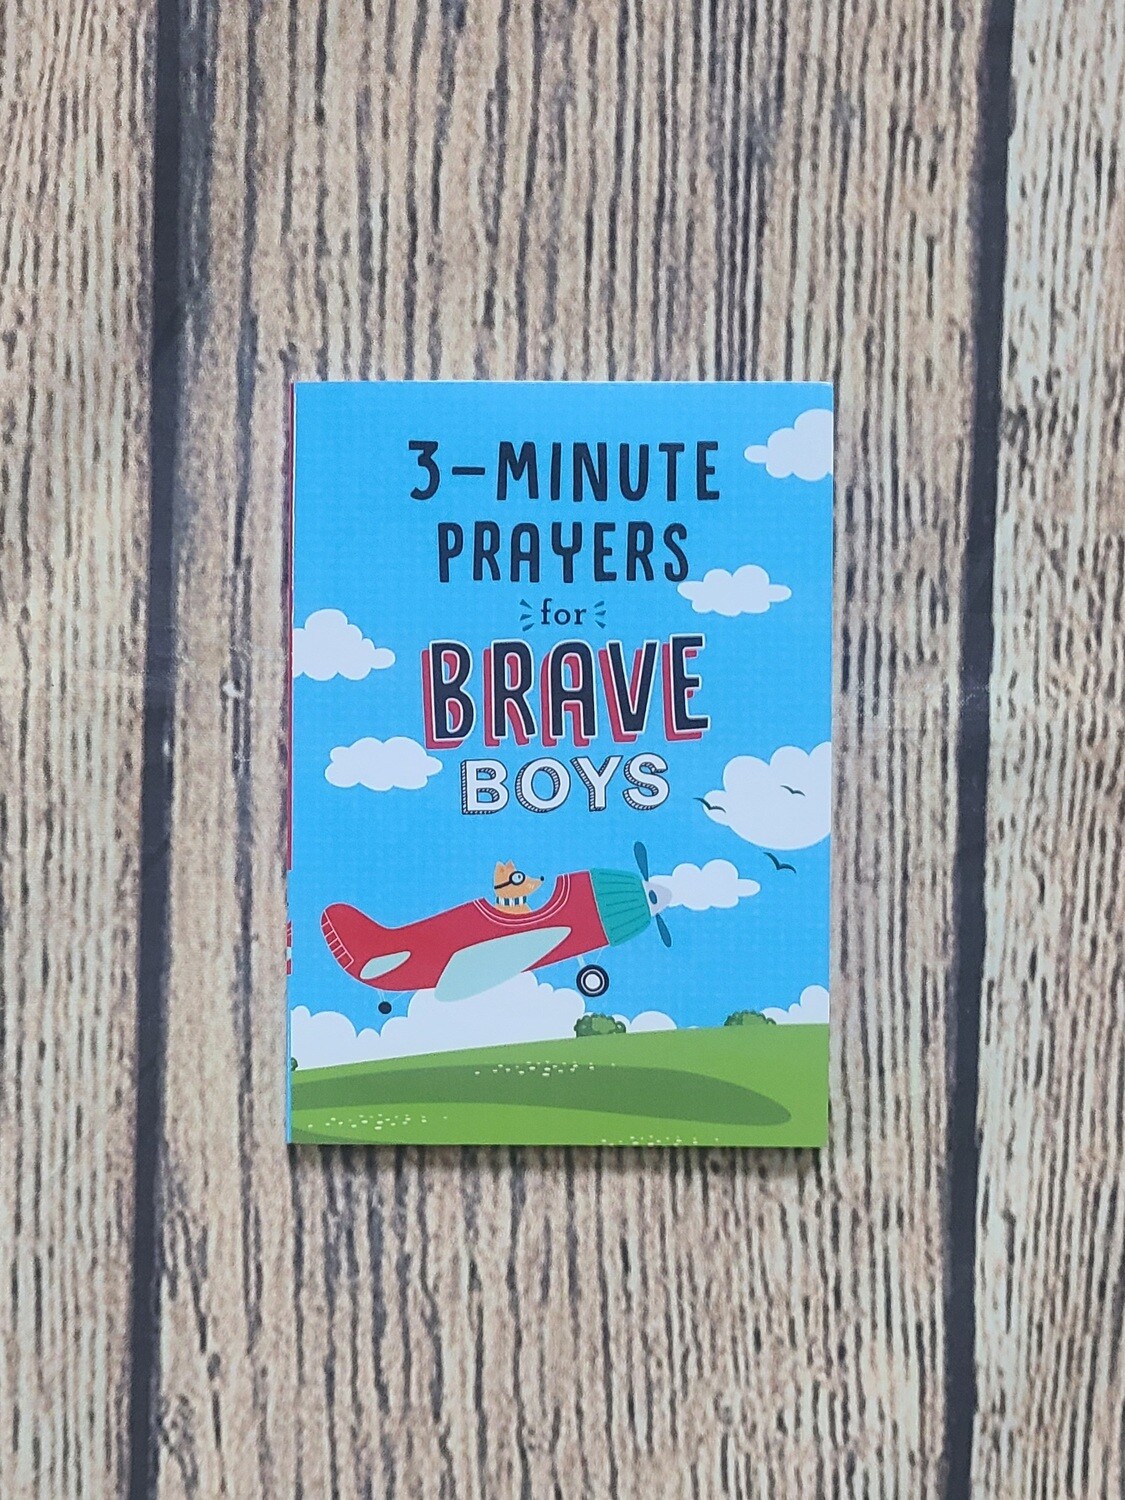 3-Minute Prayers for Brave Boys by Glenn Hascall - Paperback - New